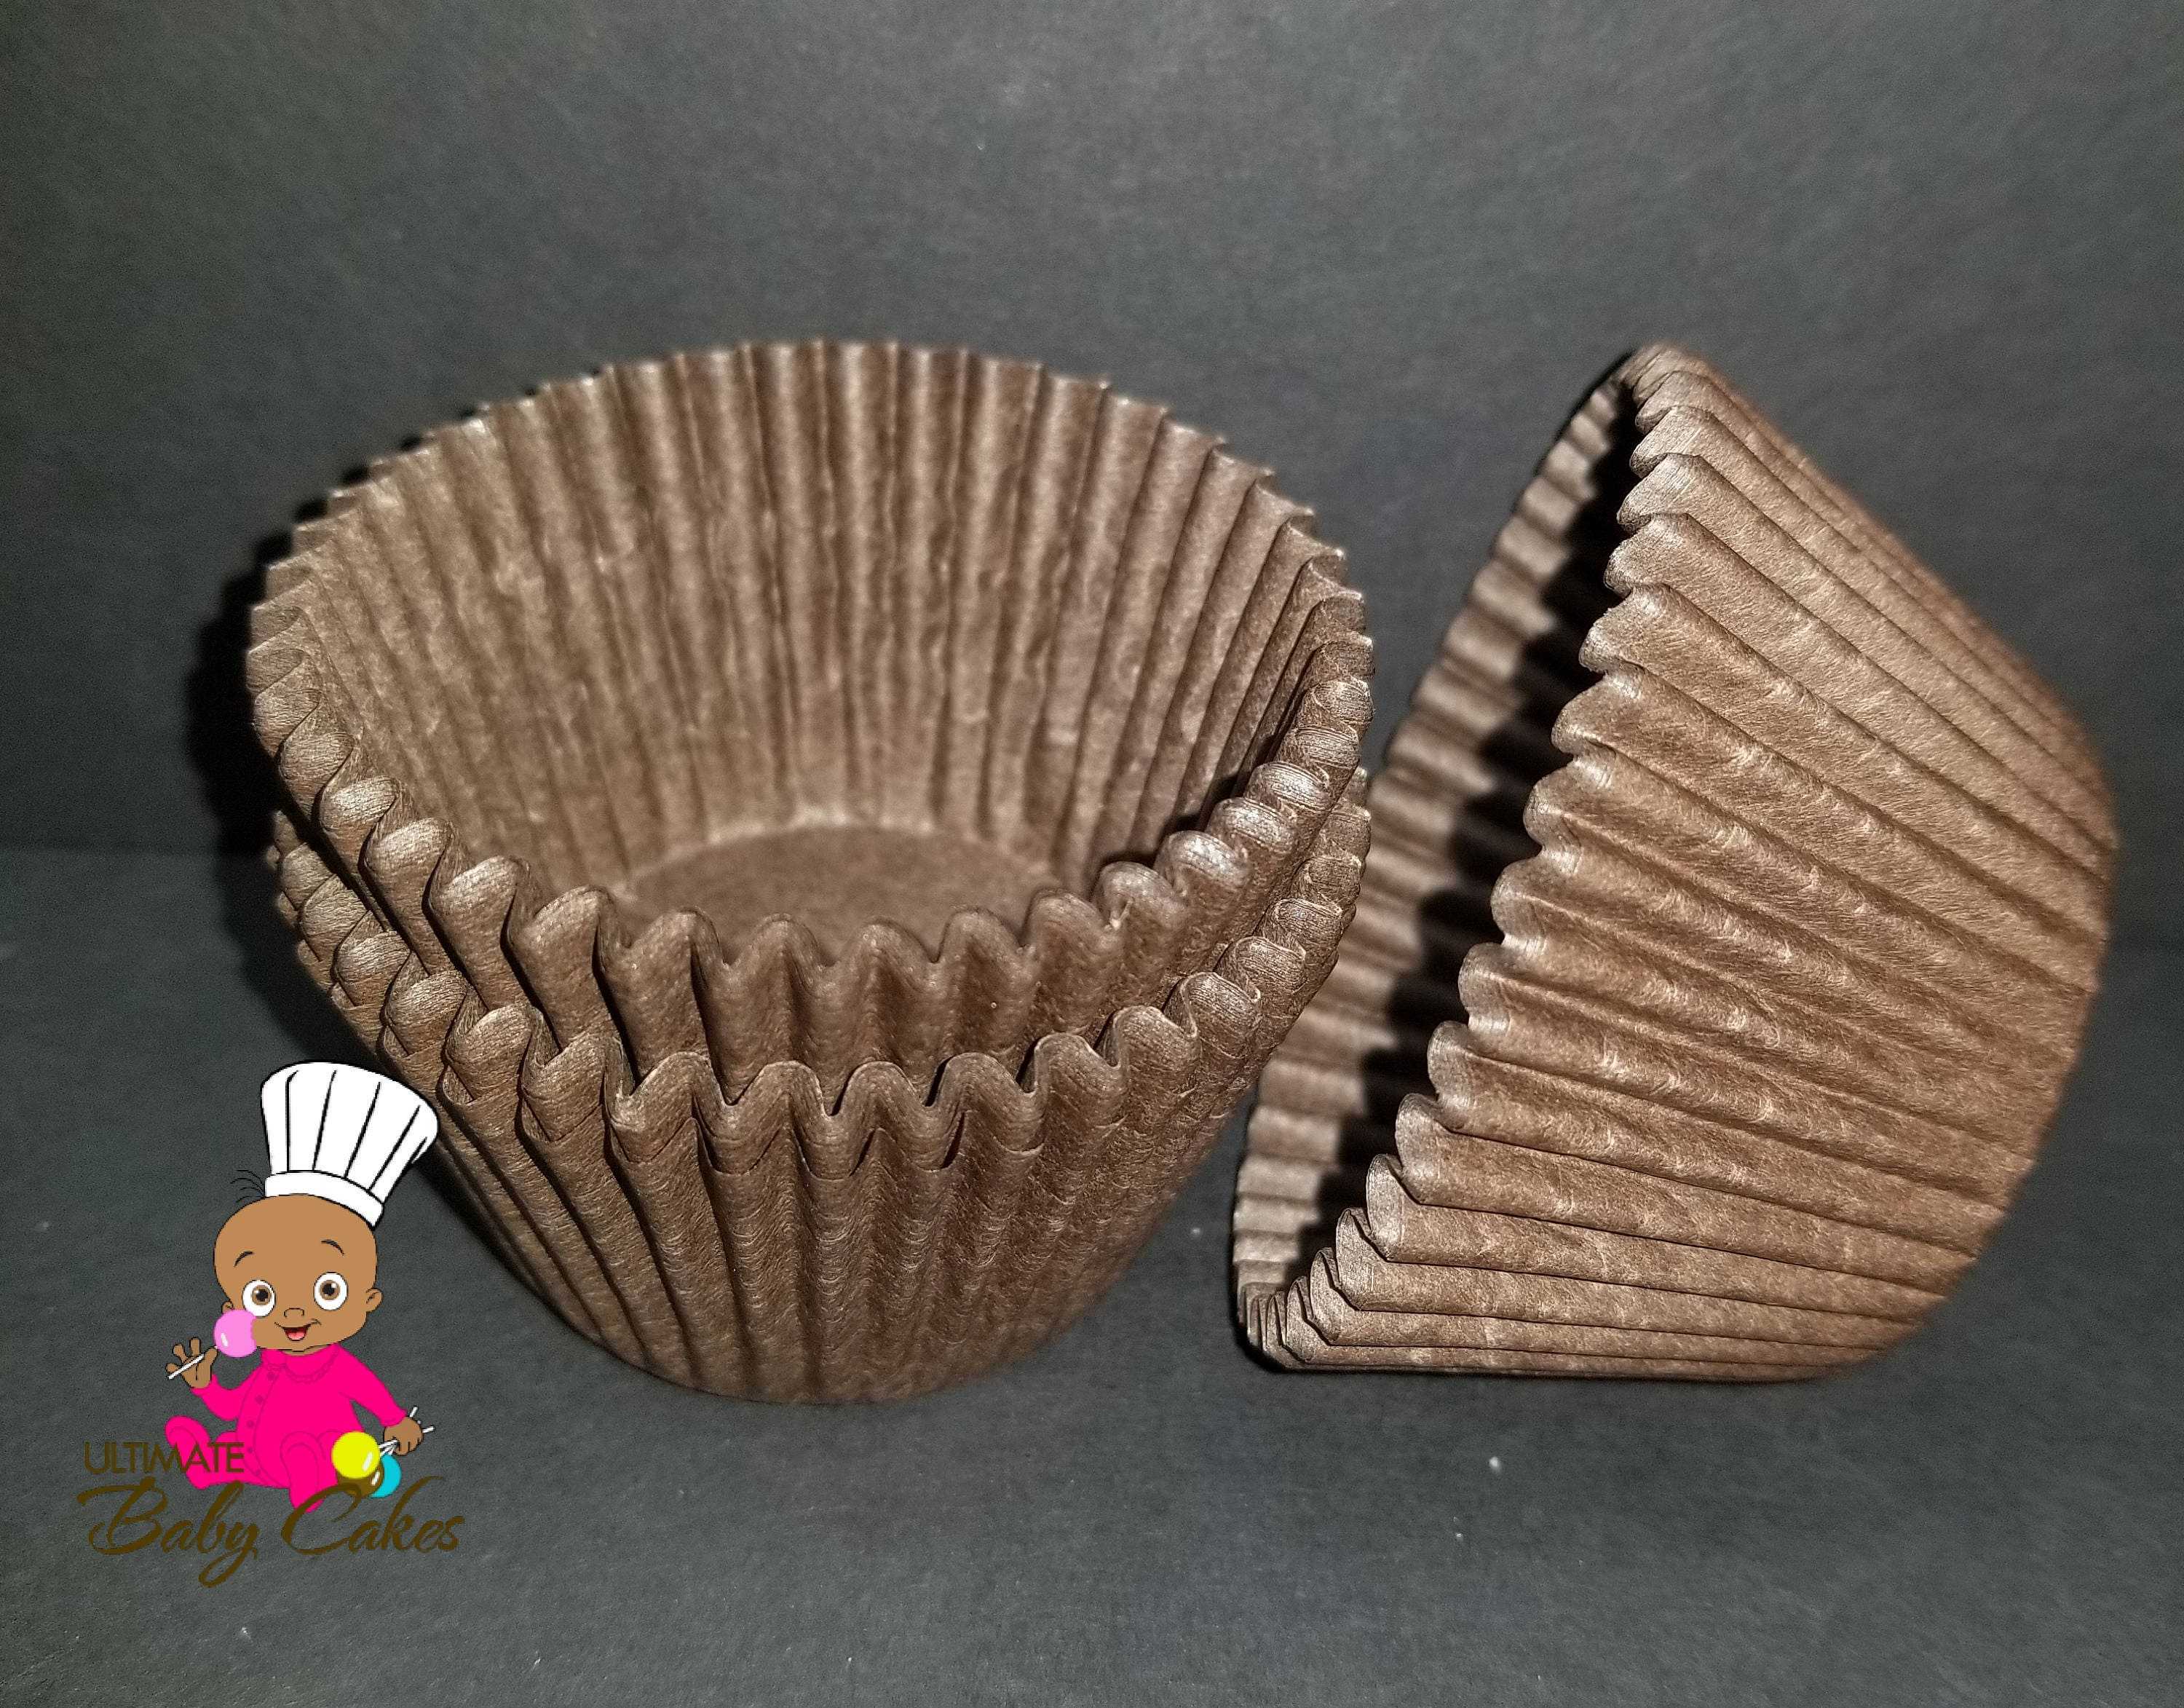 Babycakes Mini Cupcake Liners, Pastel